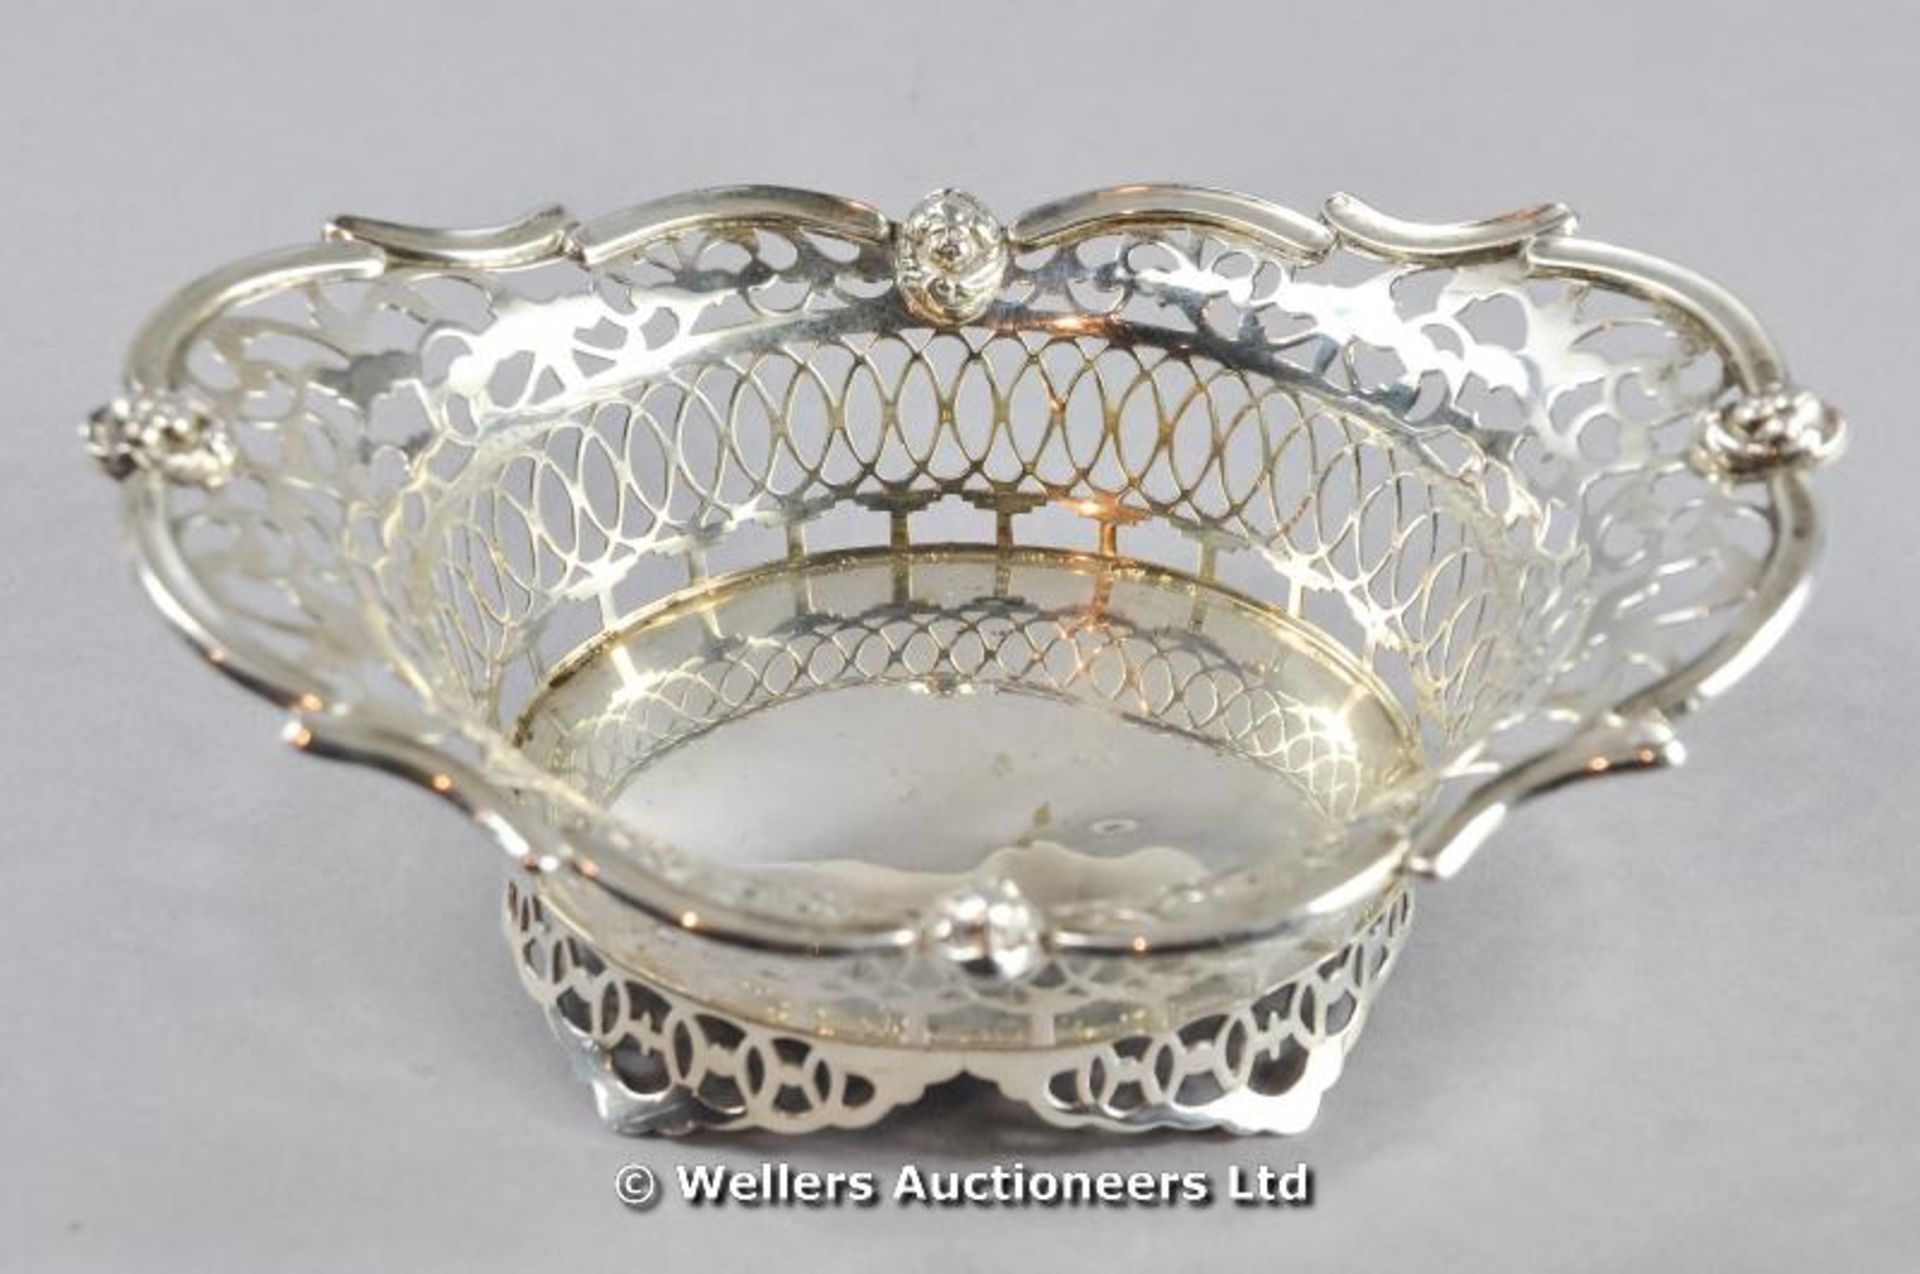 *A Goldsmith and Silversmith silver pierced basket bon bon dish, London 1901, 121 gms (Lot subject